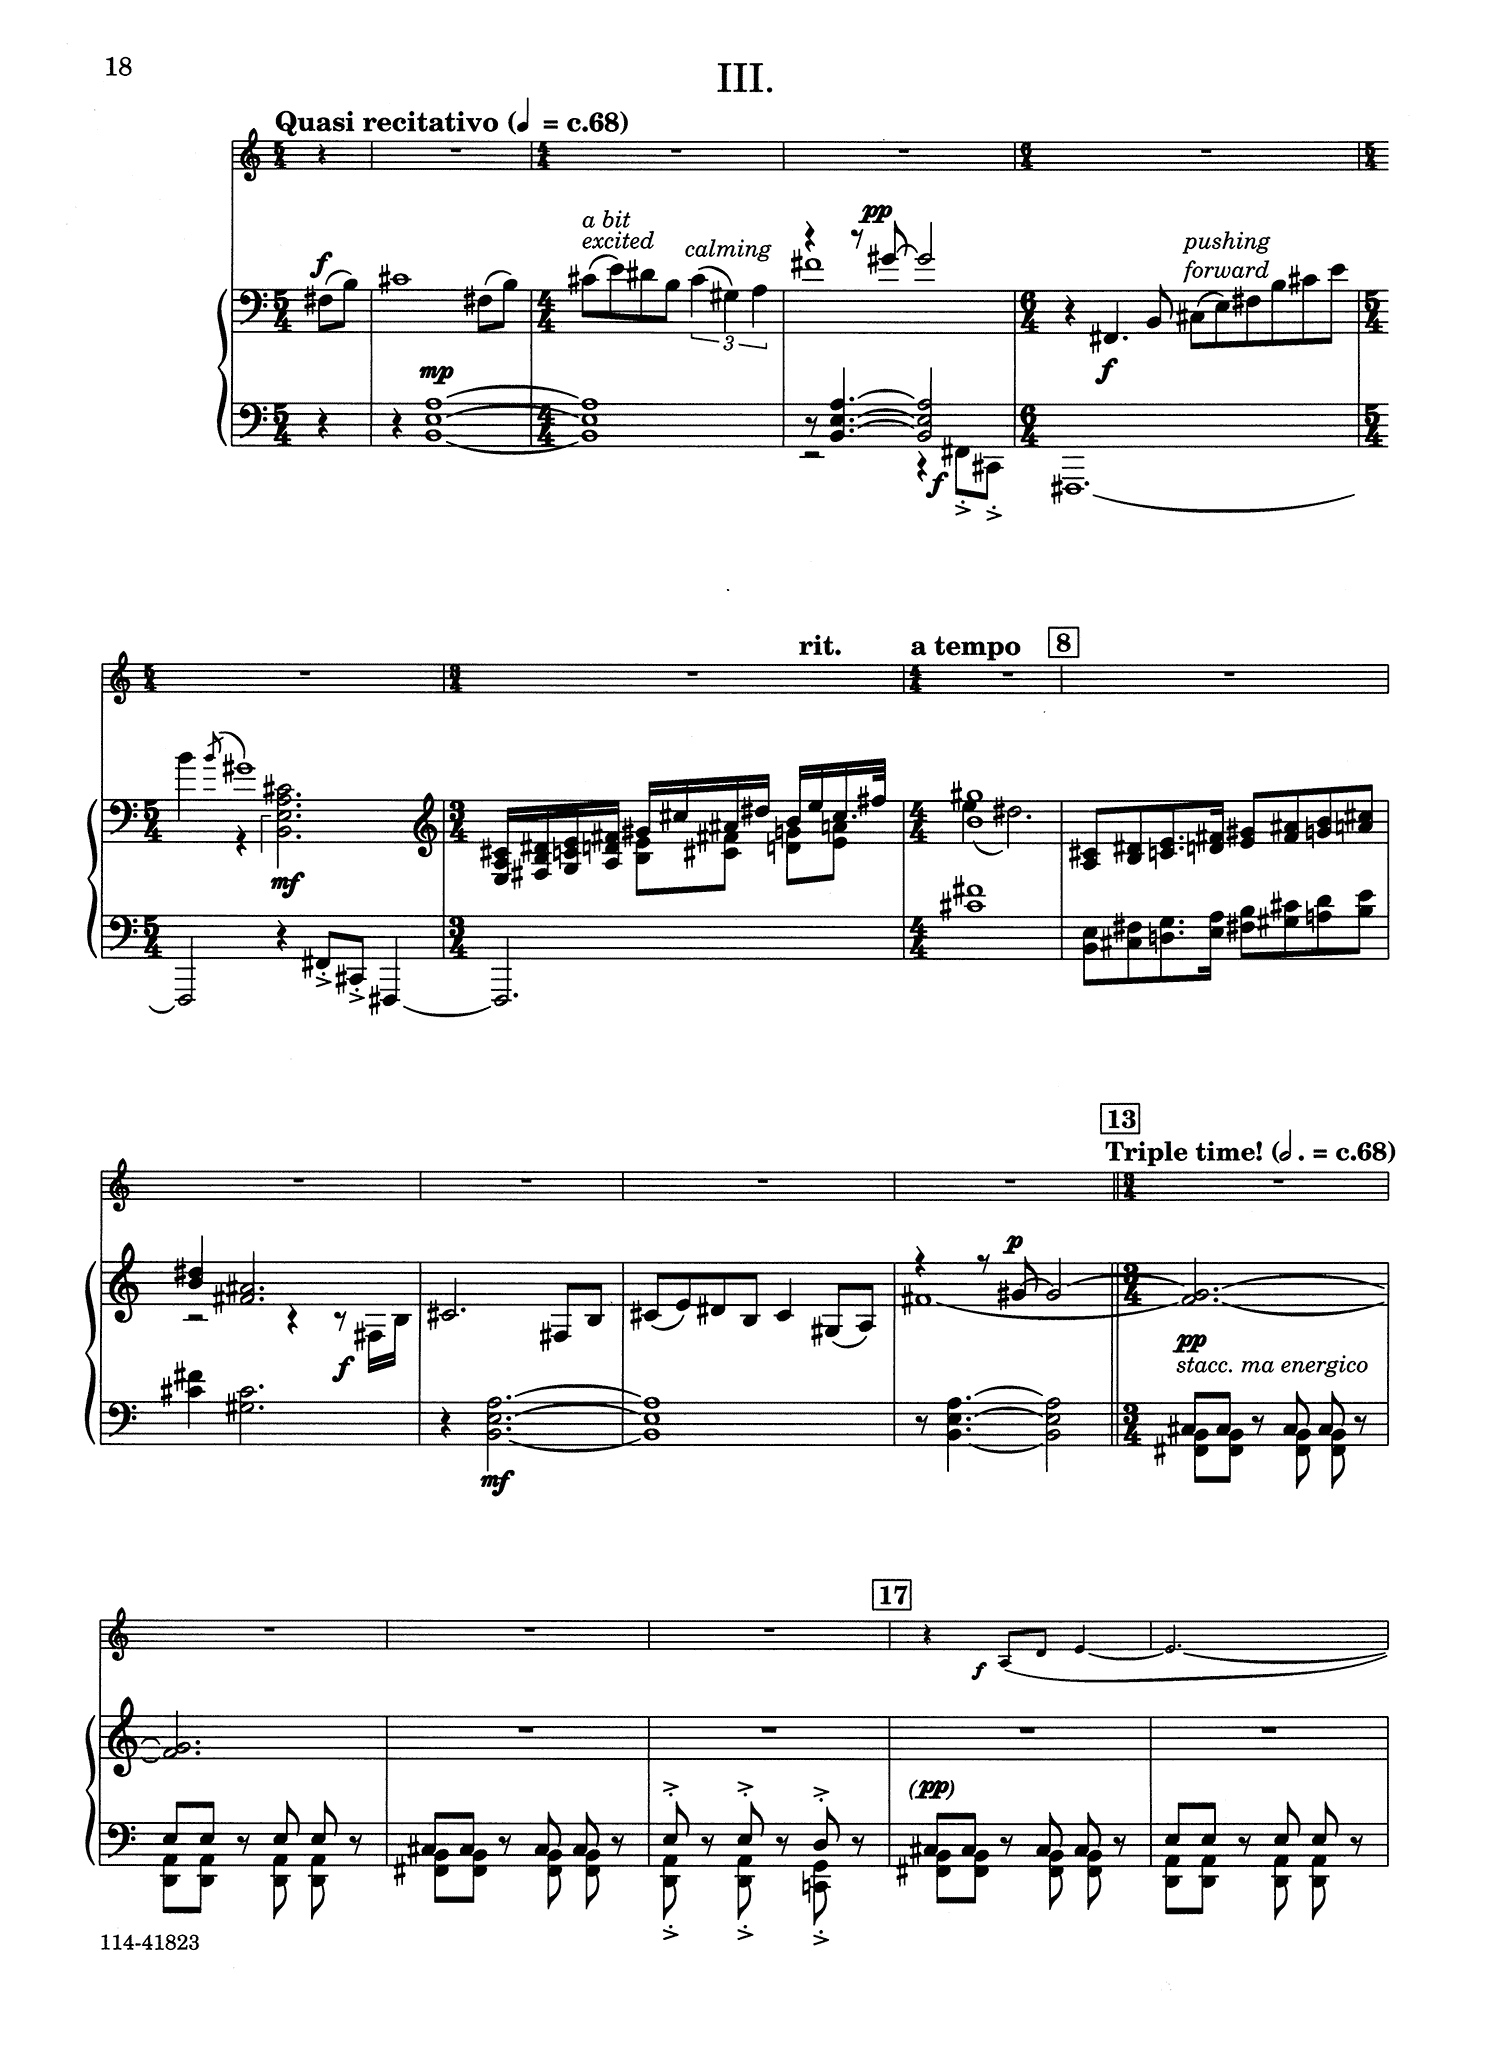 Dorff Summer Solstice clarinet concerto piano reduction - Movement 3